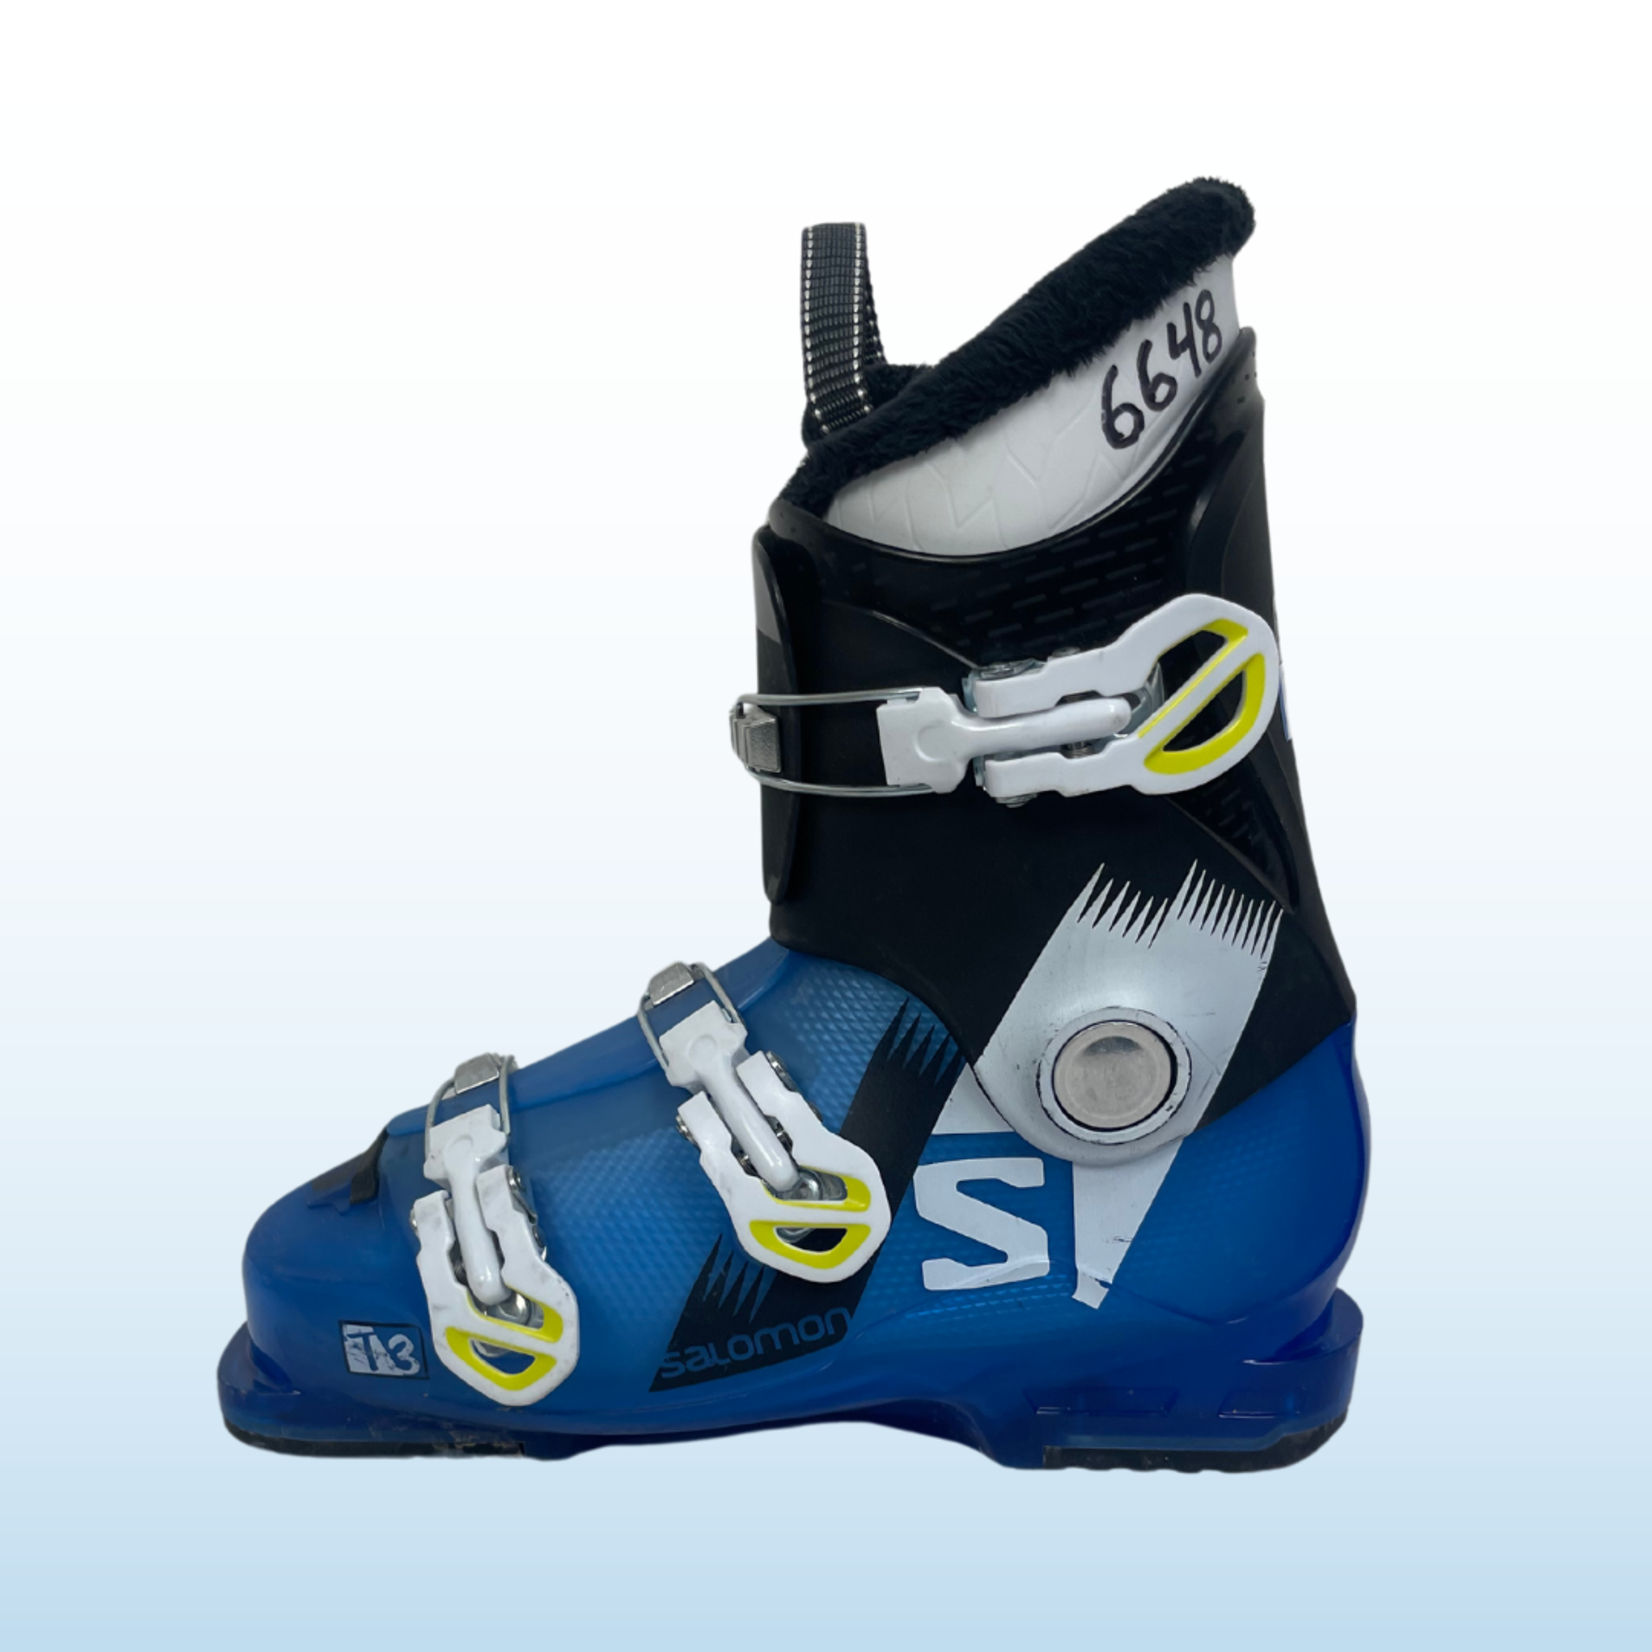 Salomon Salomon T3 Kids Ski Boots, Size 24.5